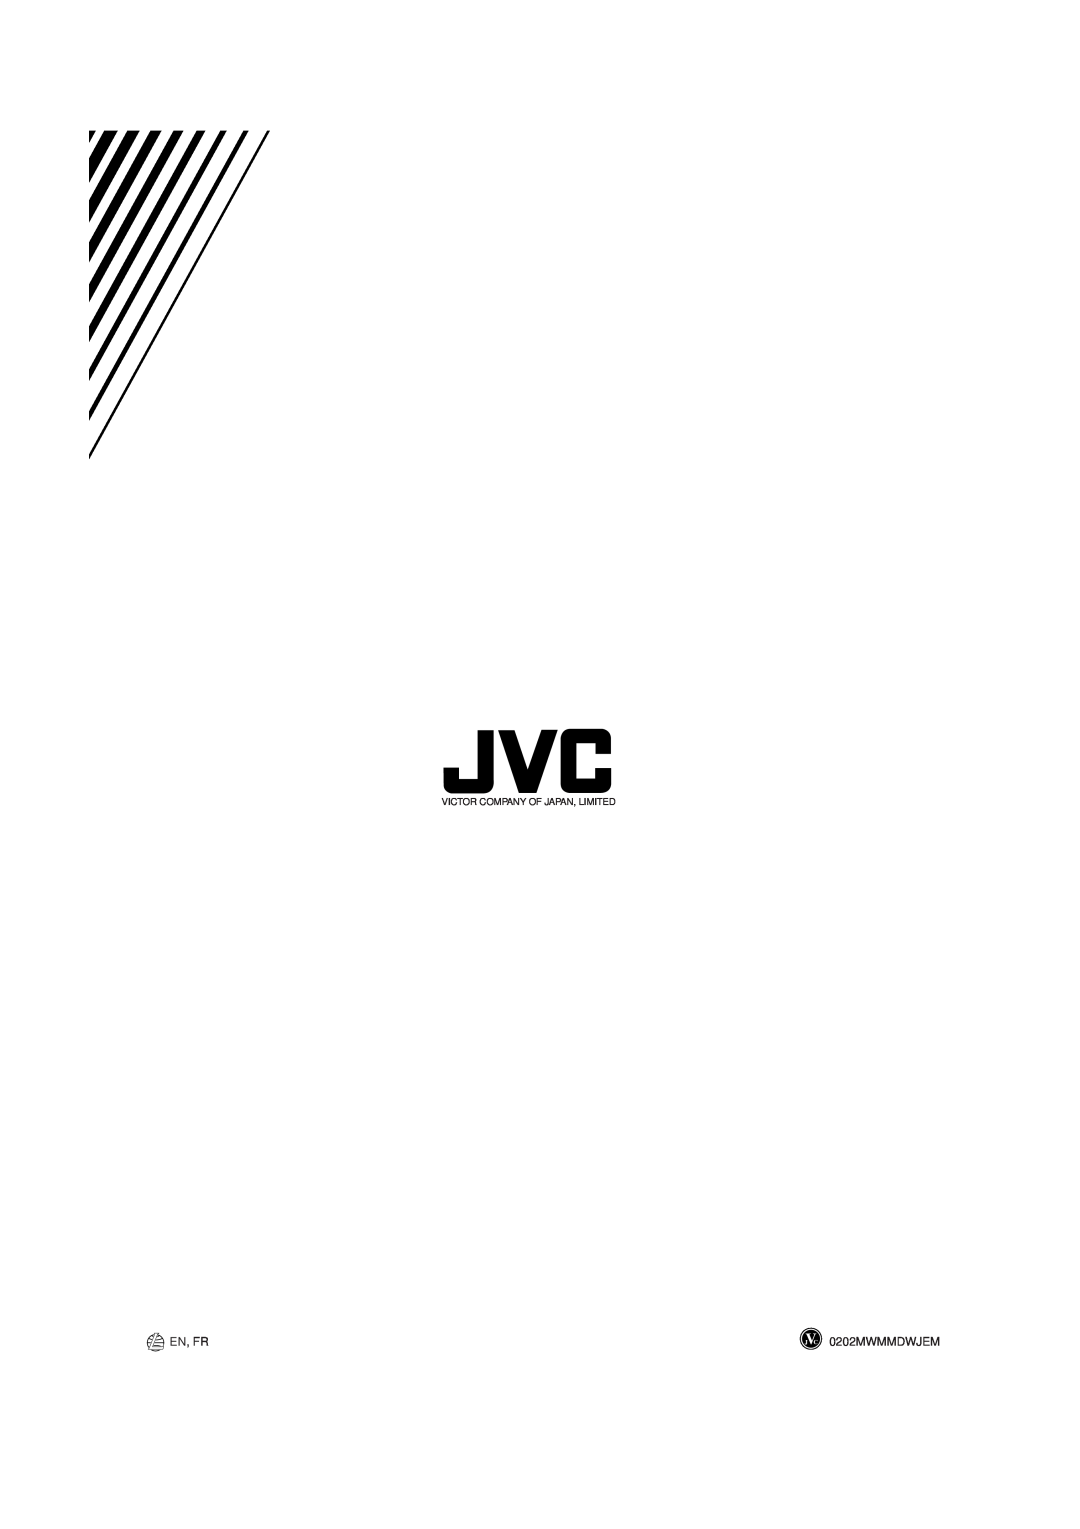 JVC HX-Z1 manual En, Fr, 0202MWMMDWJEM, Victor Company Of Japan, Limited 